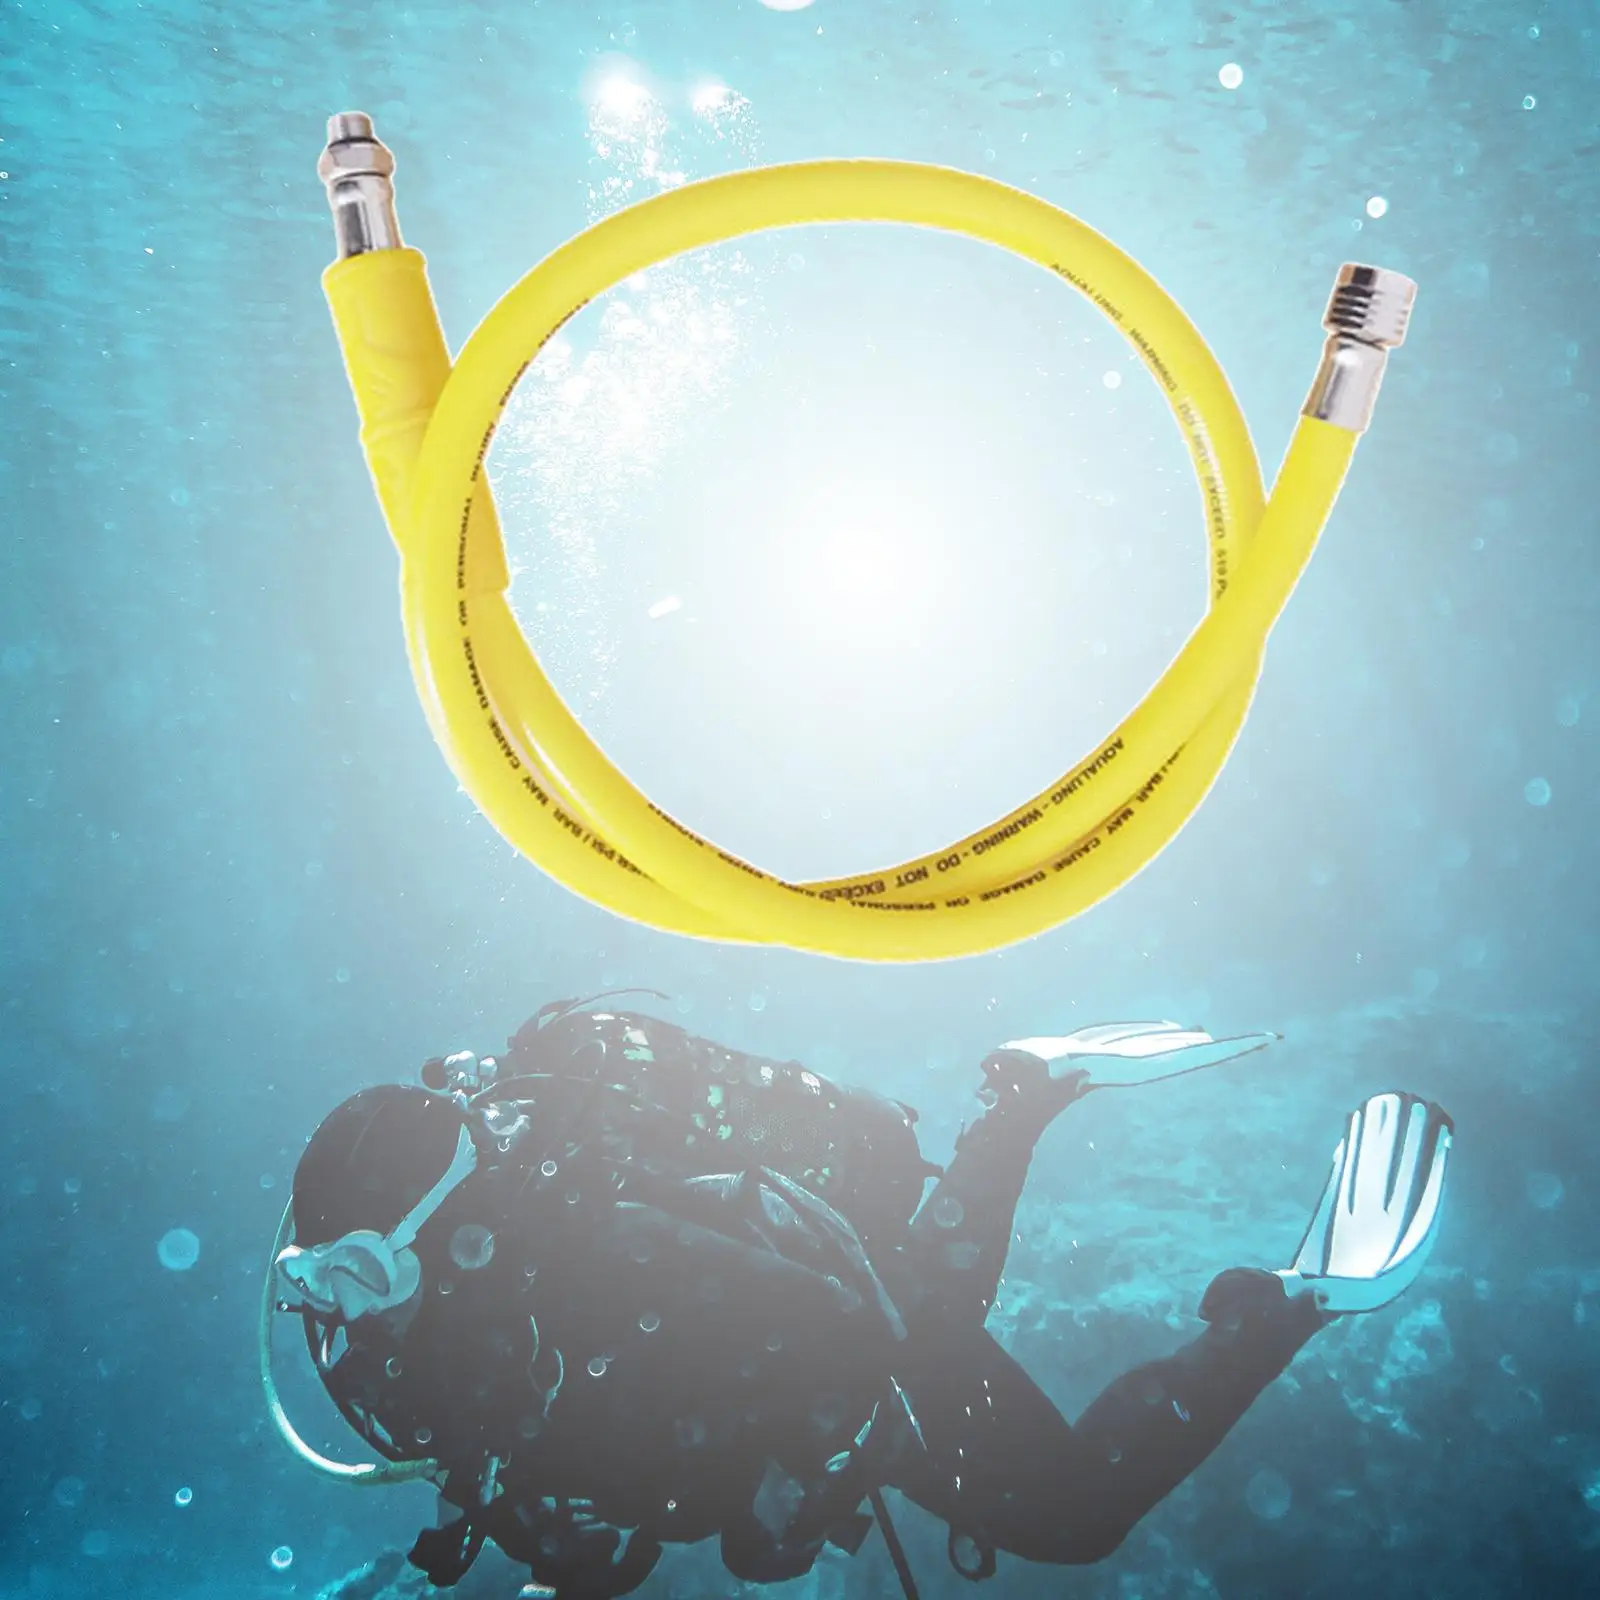 Medium Pressure Hose Snorkel Durable Lightweight Scuba Diving Regulator for Underwater Farming Diving Equipment Scuba Diving